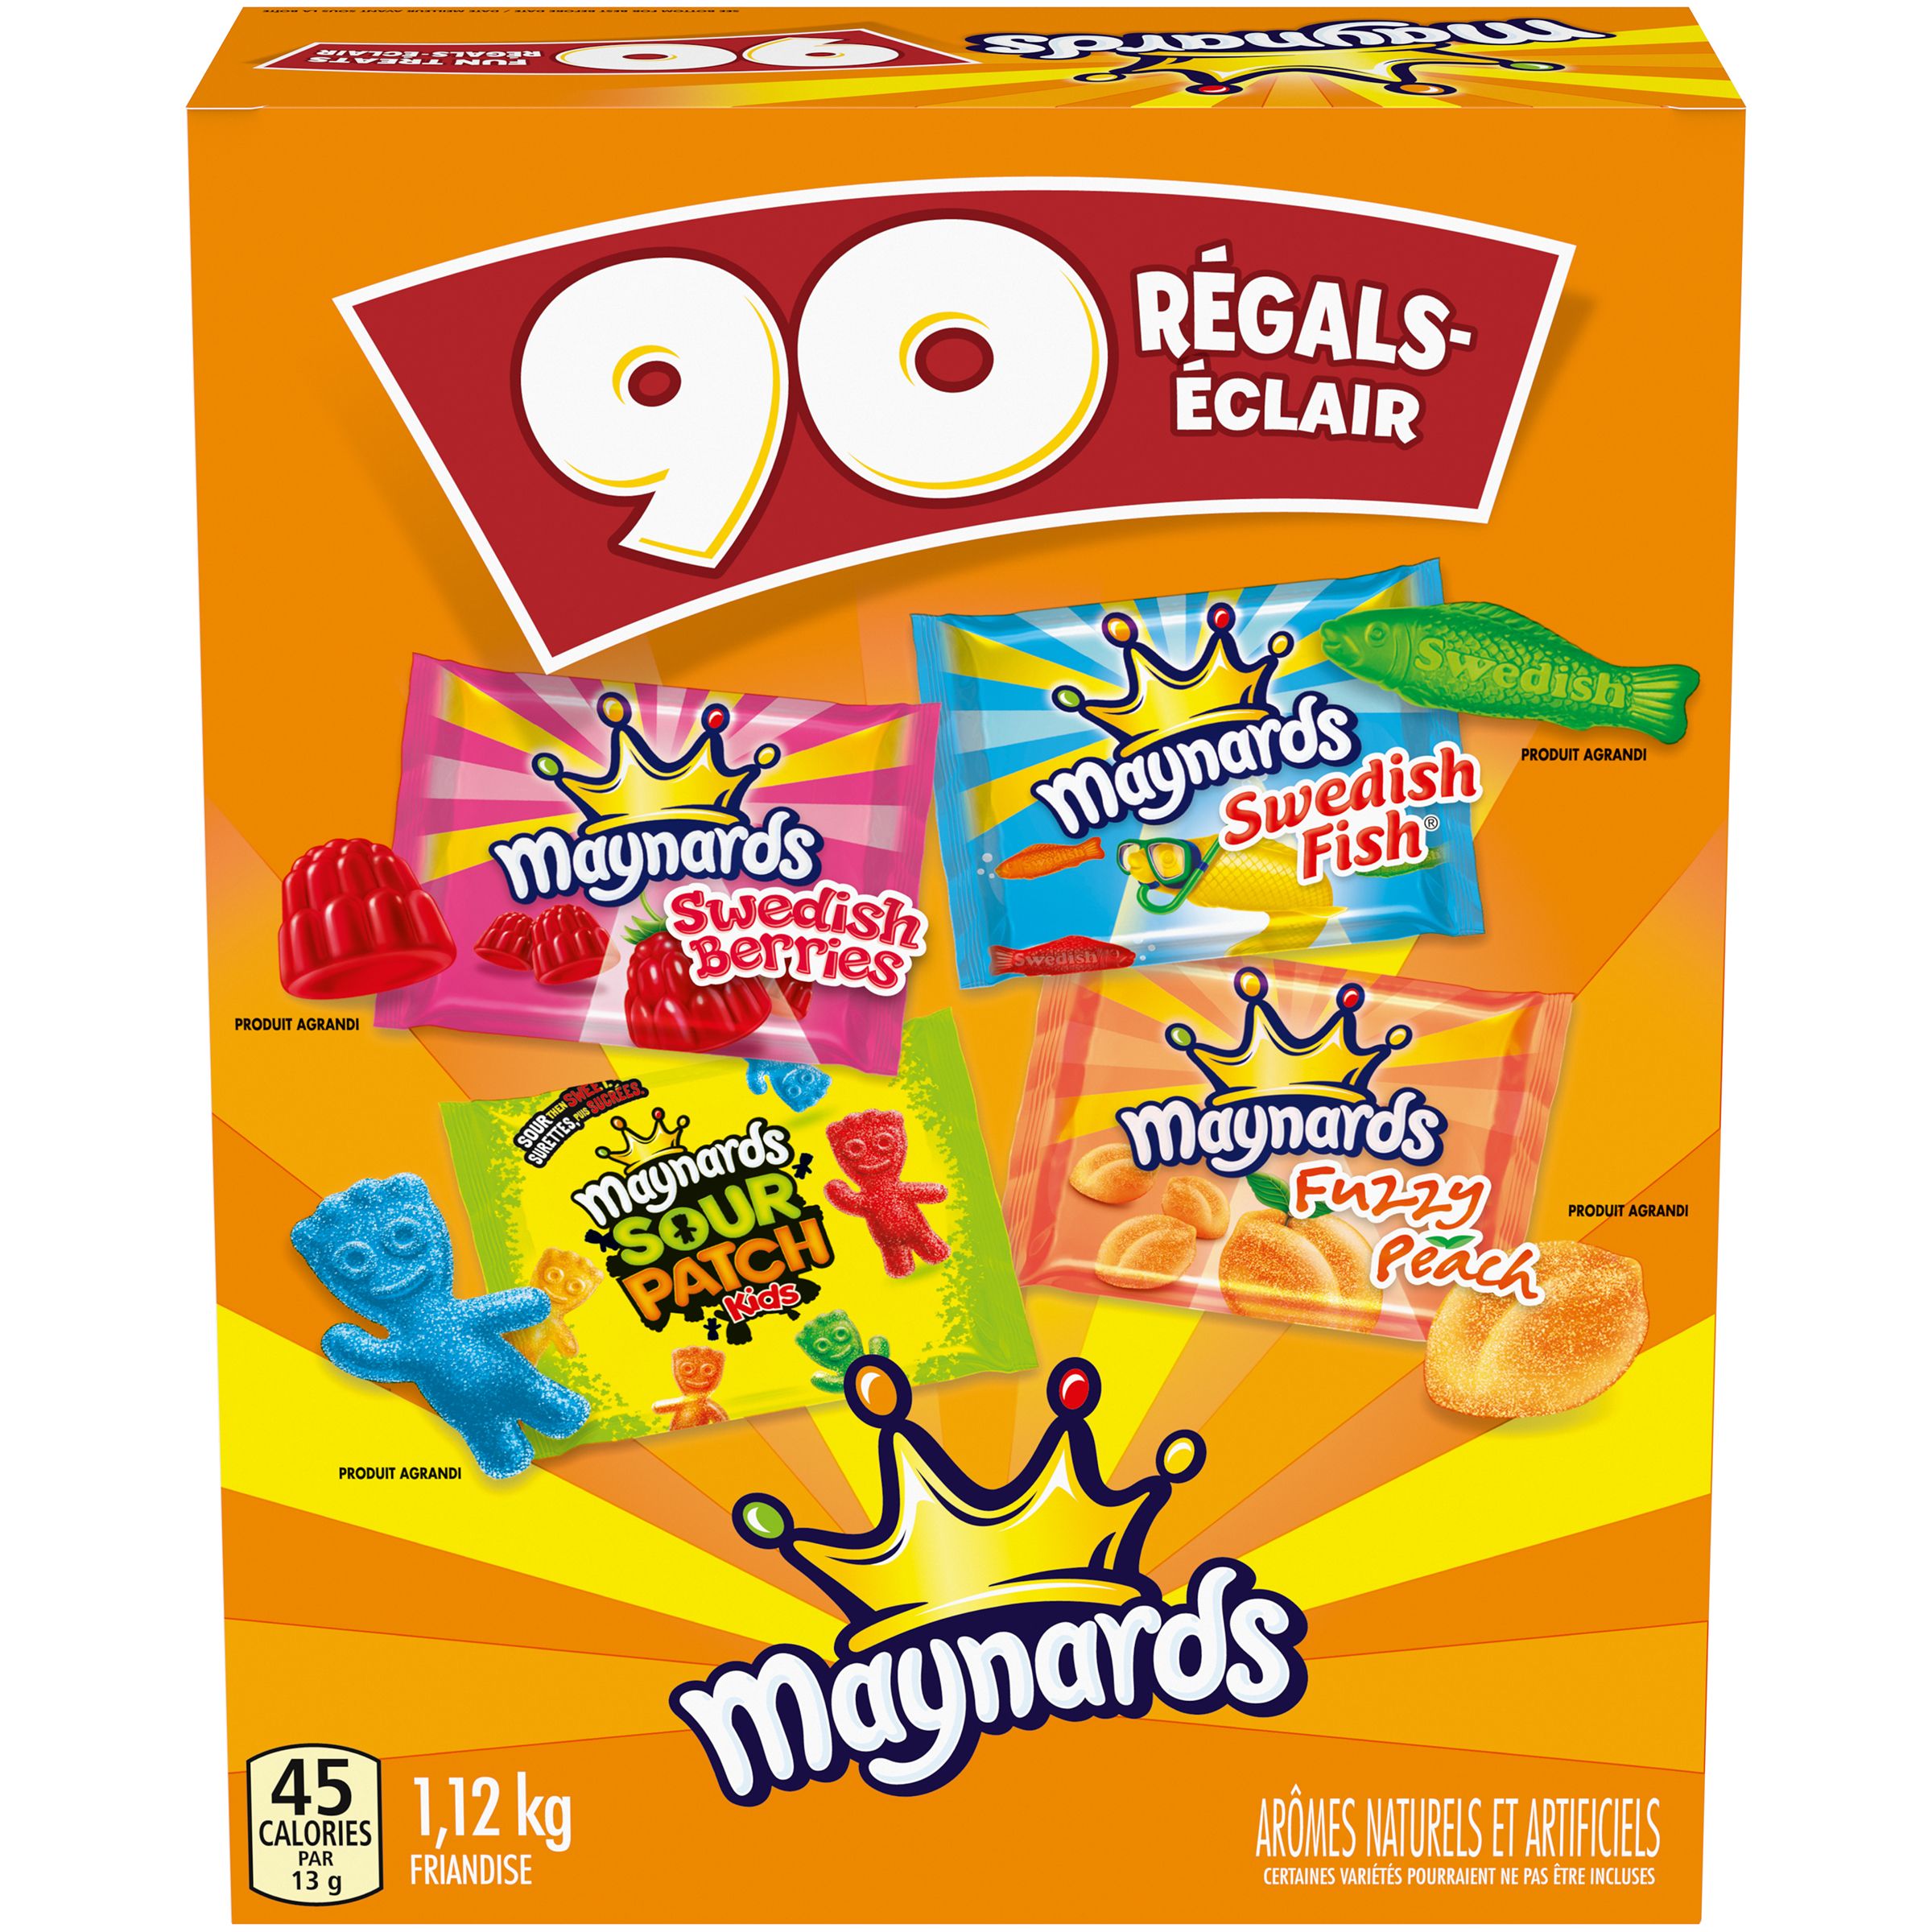 Maynards Fun Treats Soft Candy 1.12 Kg